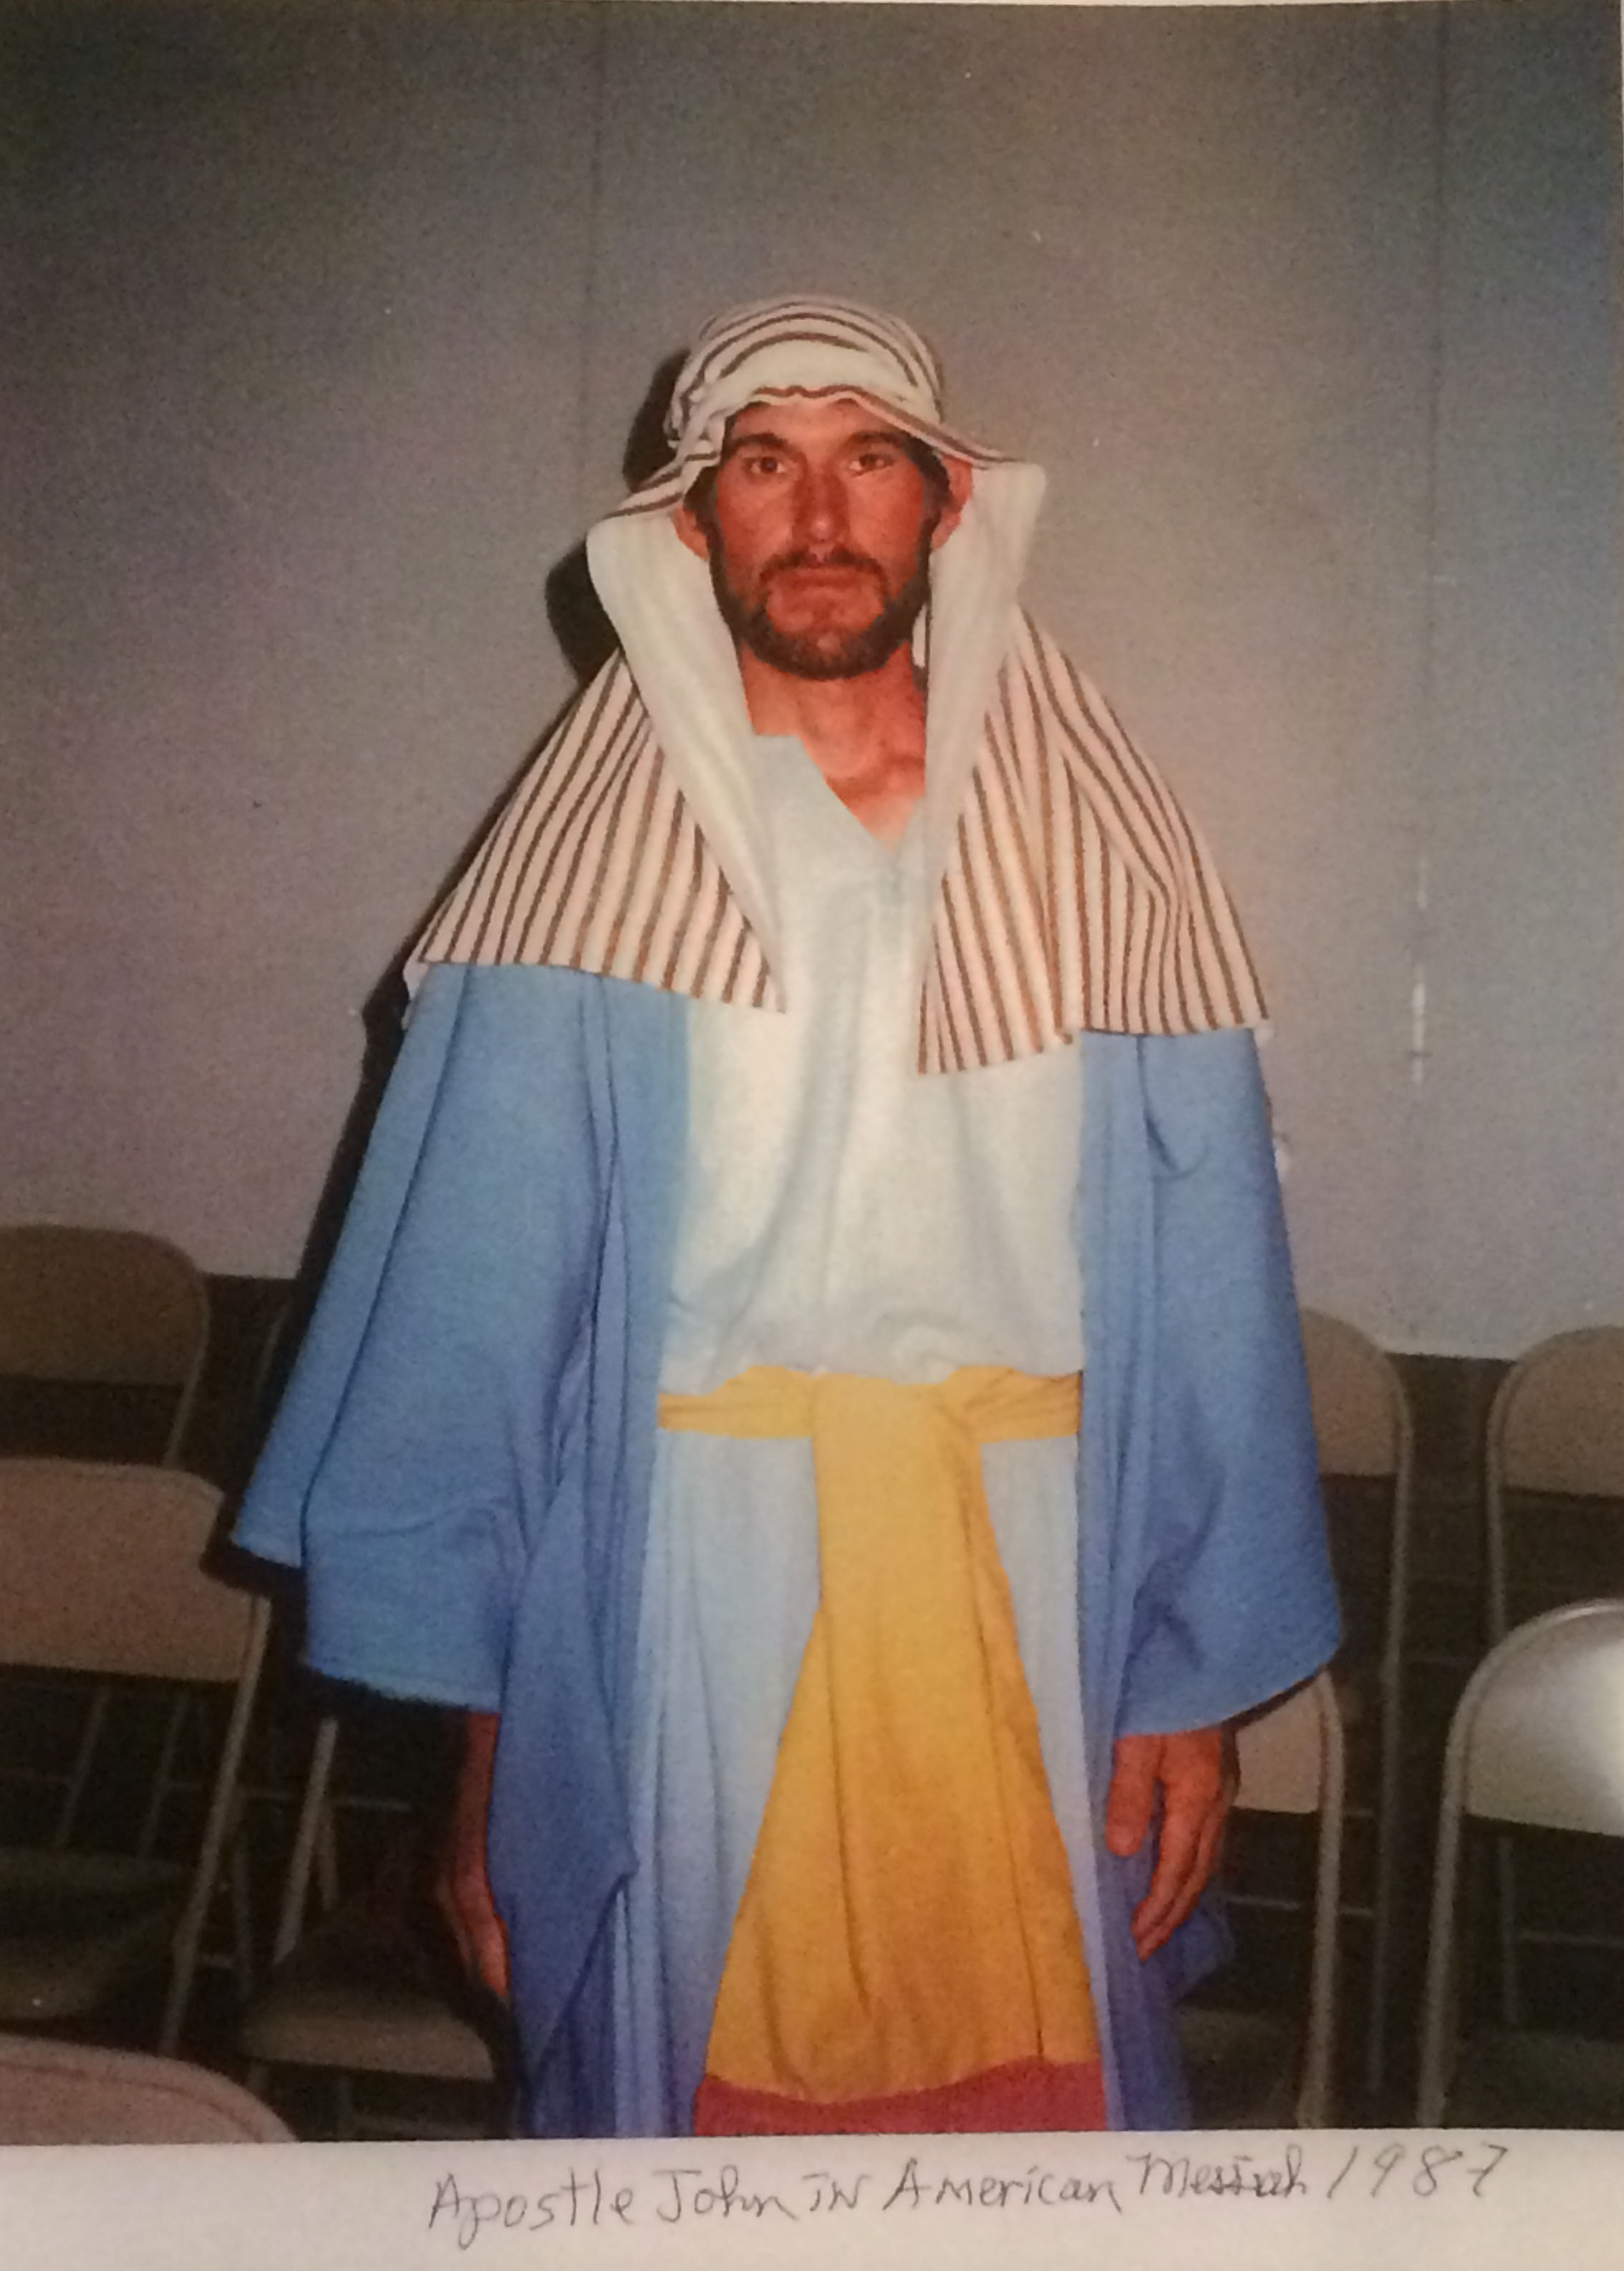 Apostle John in American Messiah 1987